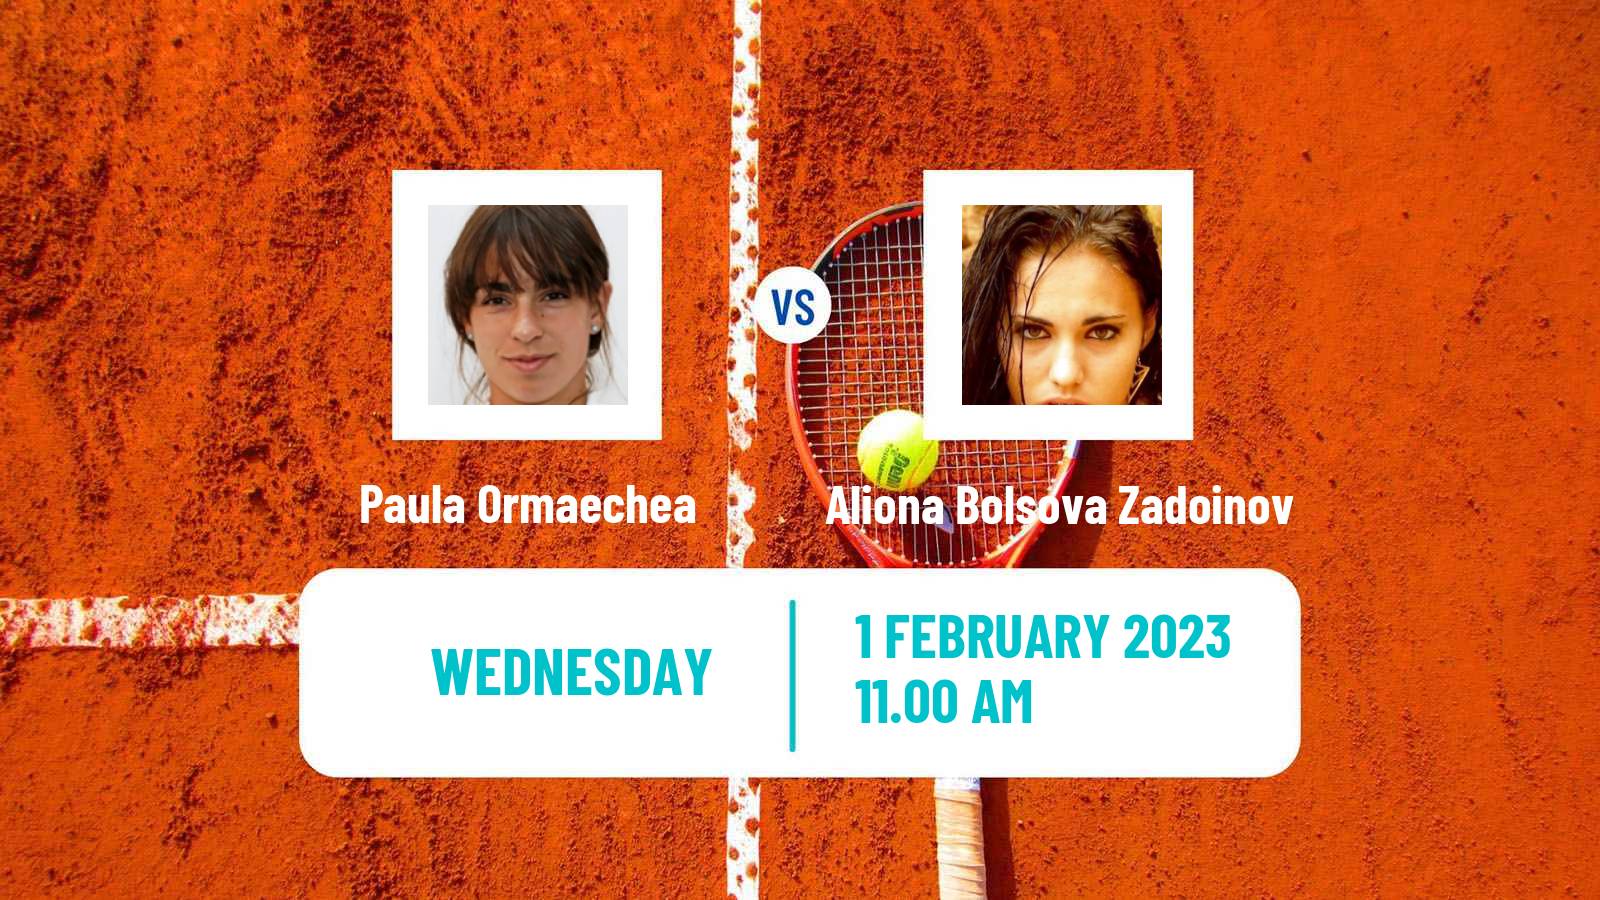 Tennis ATP Challenger Paula Ormaechea - Aliona Bolsova Zadoinov